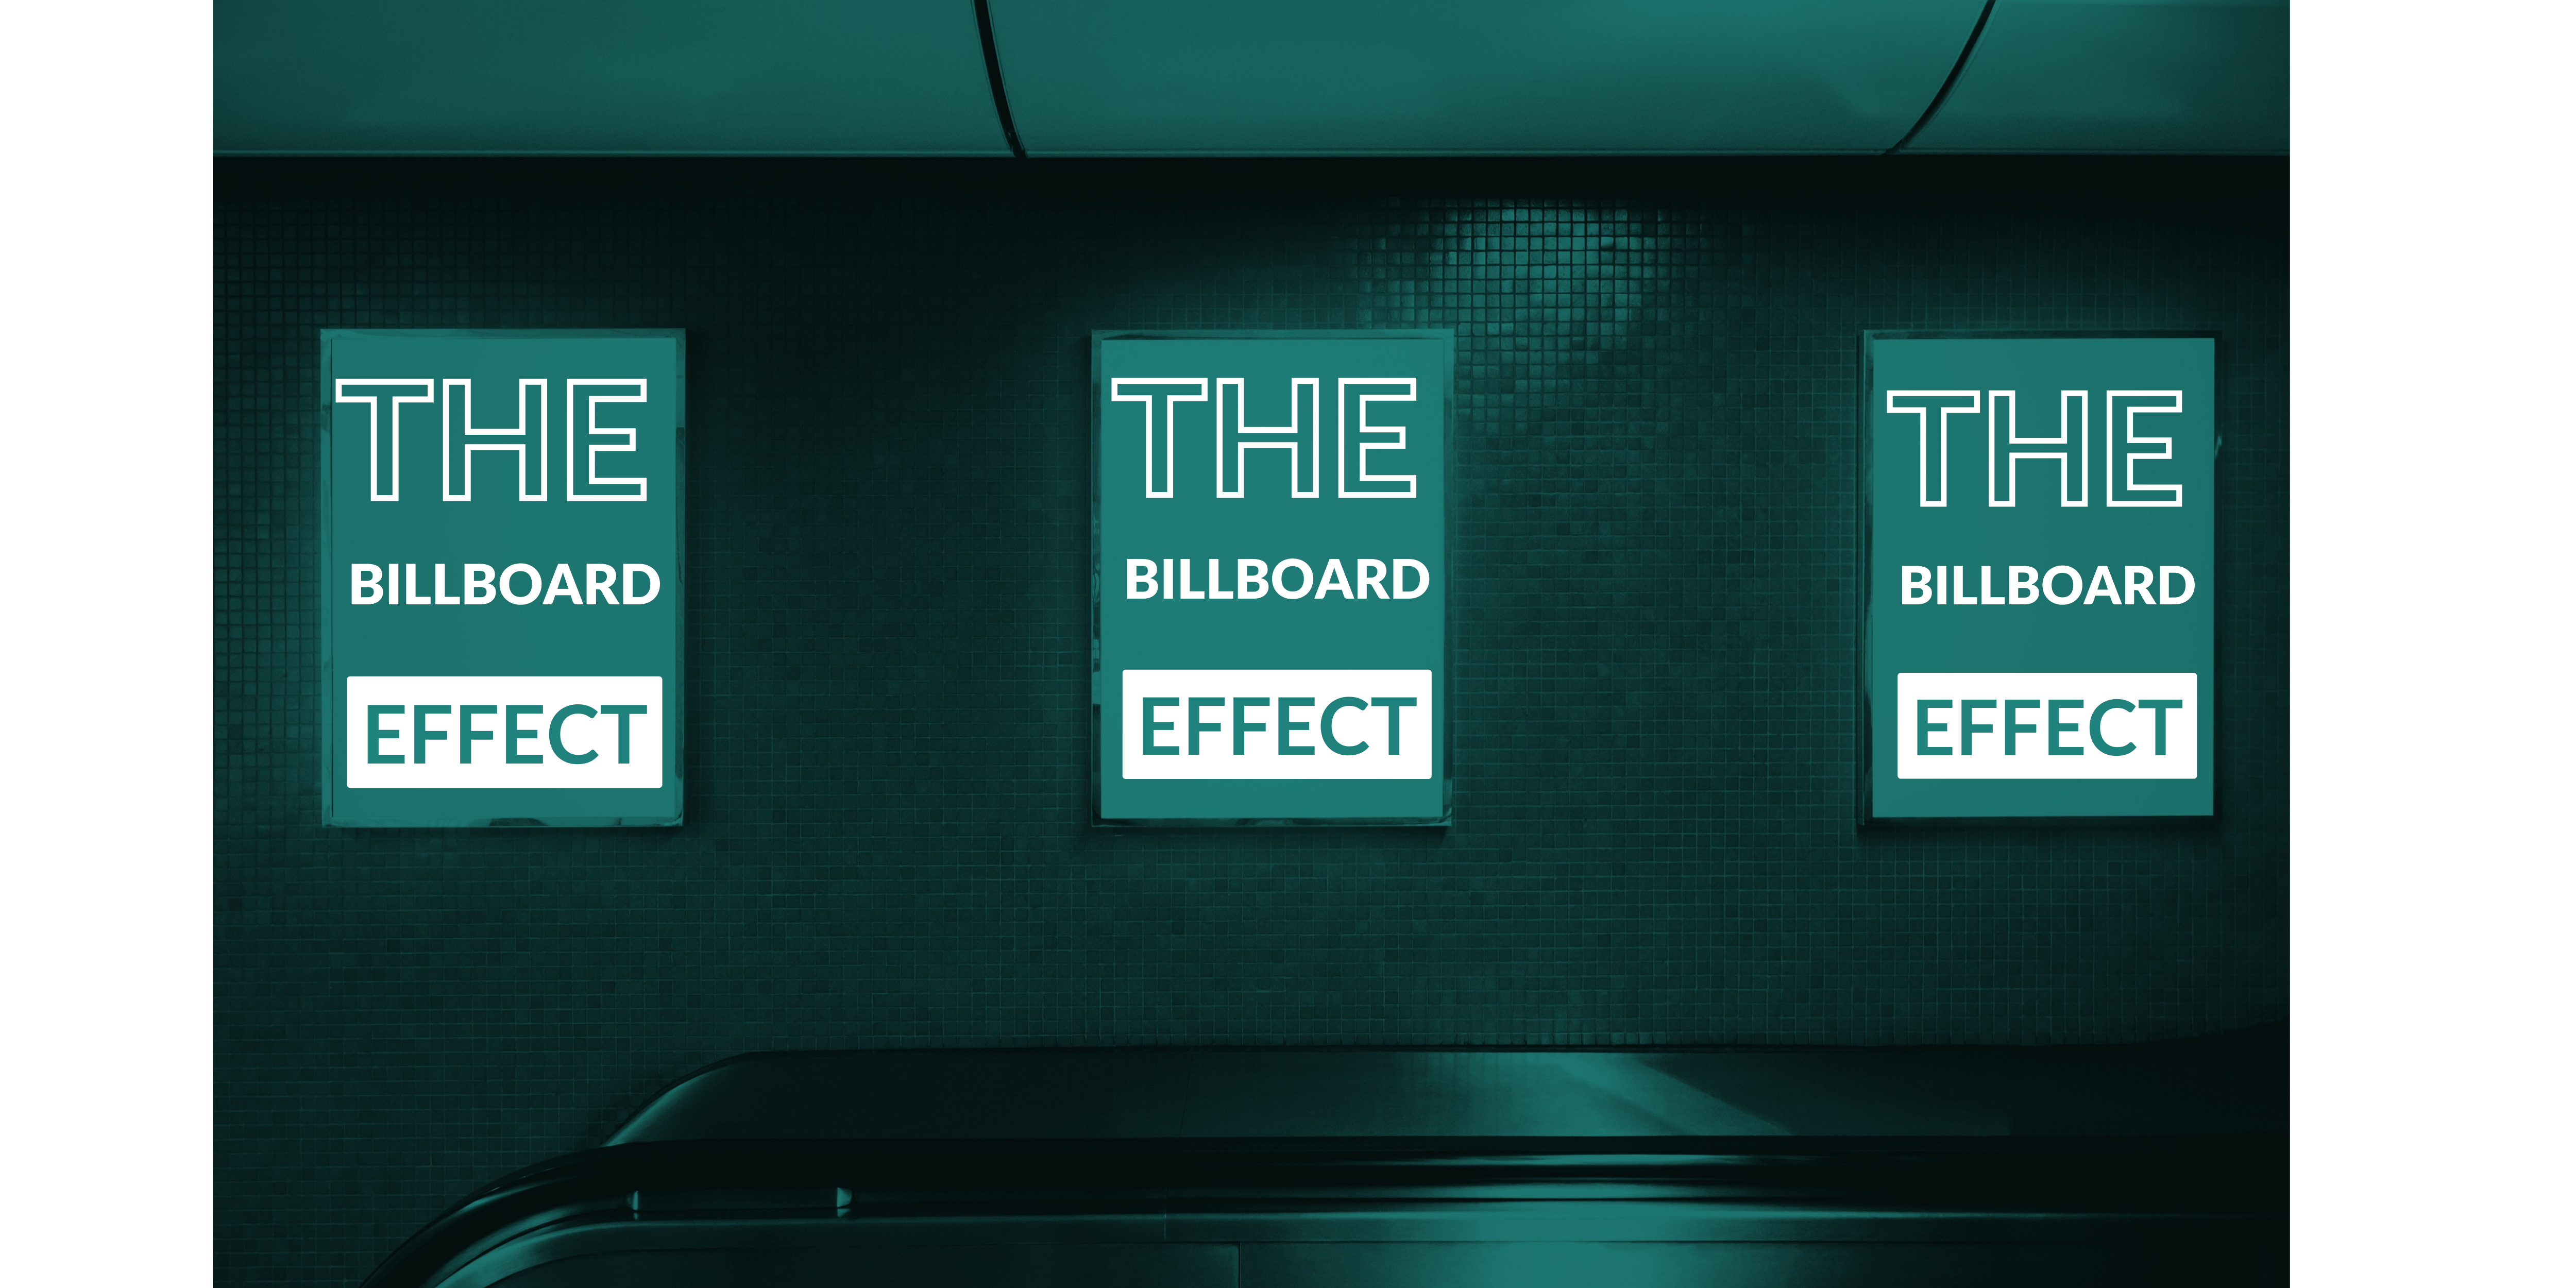 Green macro image titled “The Billboard Effect”